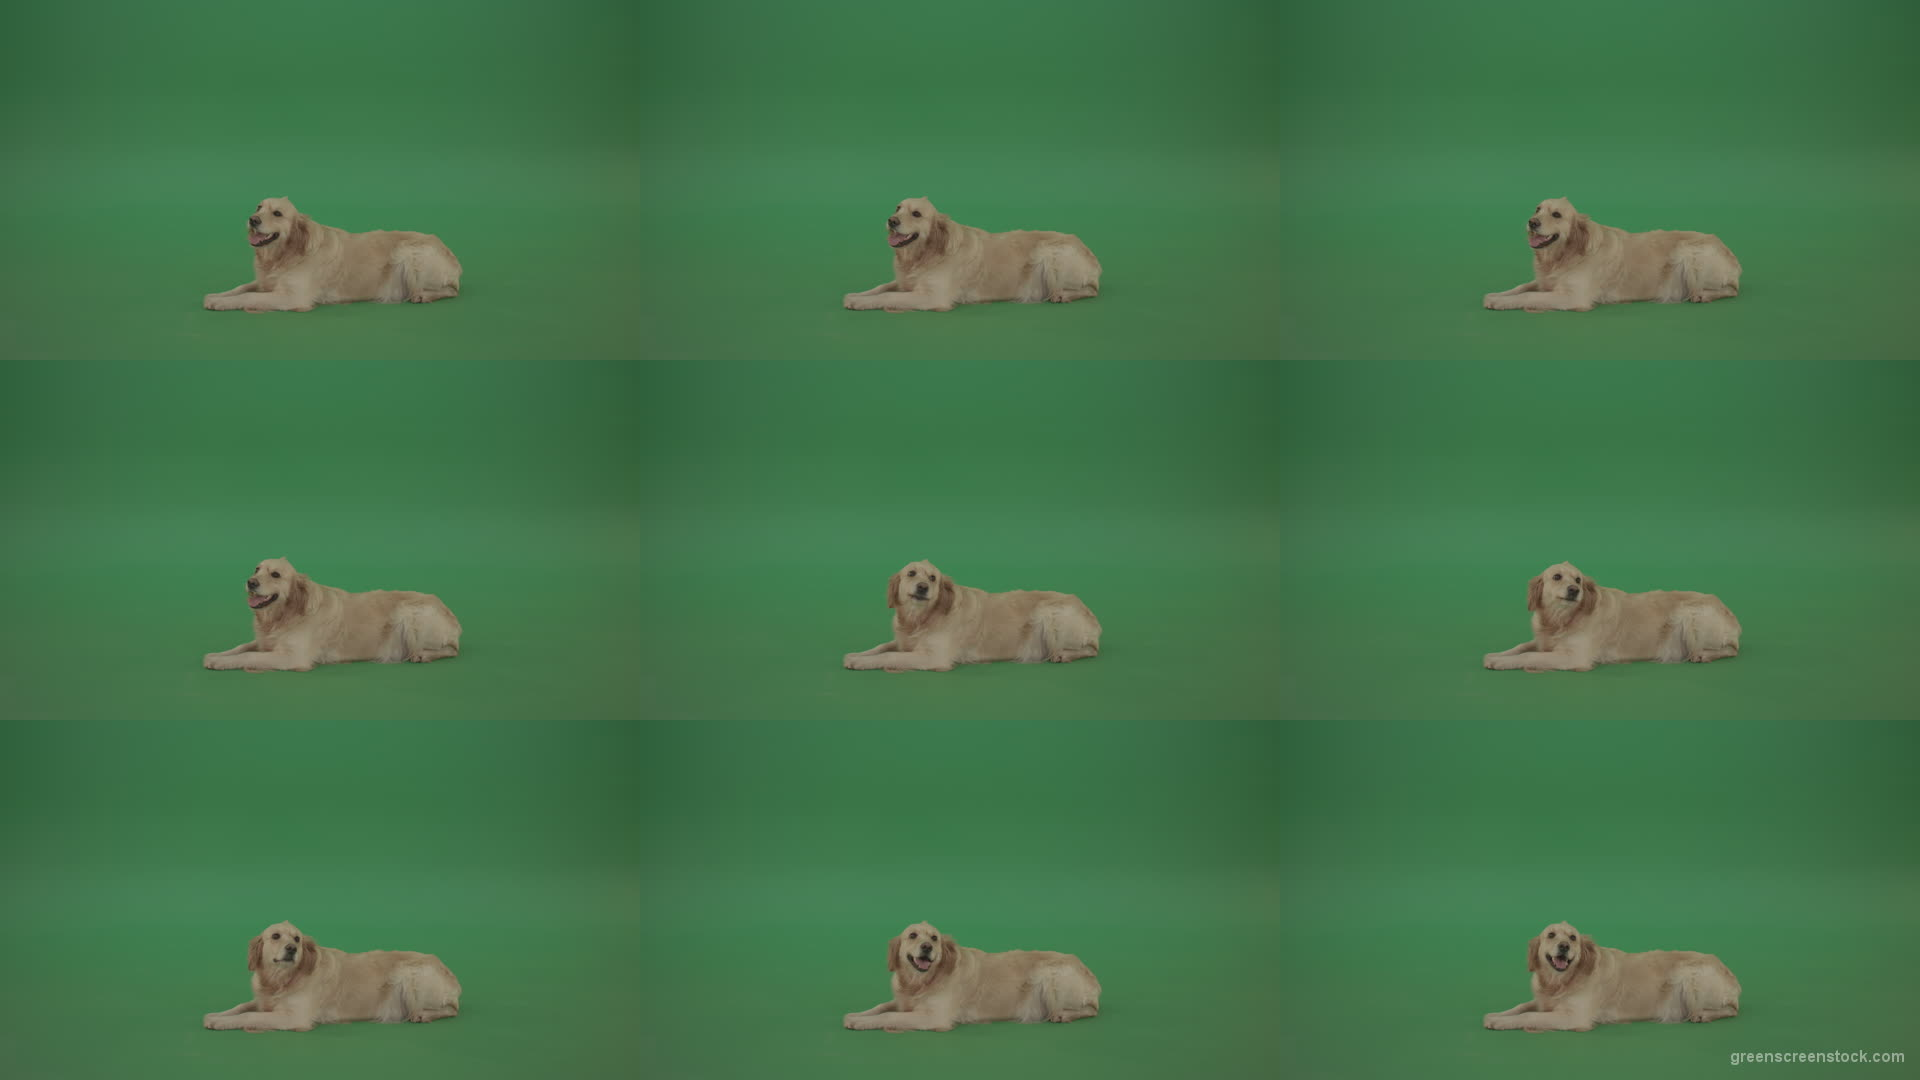 Golden-Retriever-Gun-Dog-Bird-Dog-lying-green-floor-isolated-on-green-screen Green Screen Stock